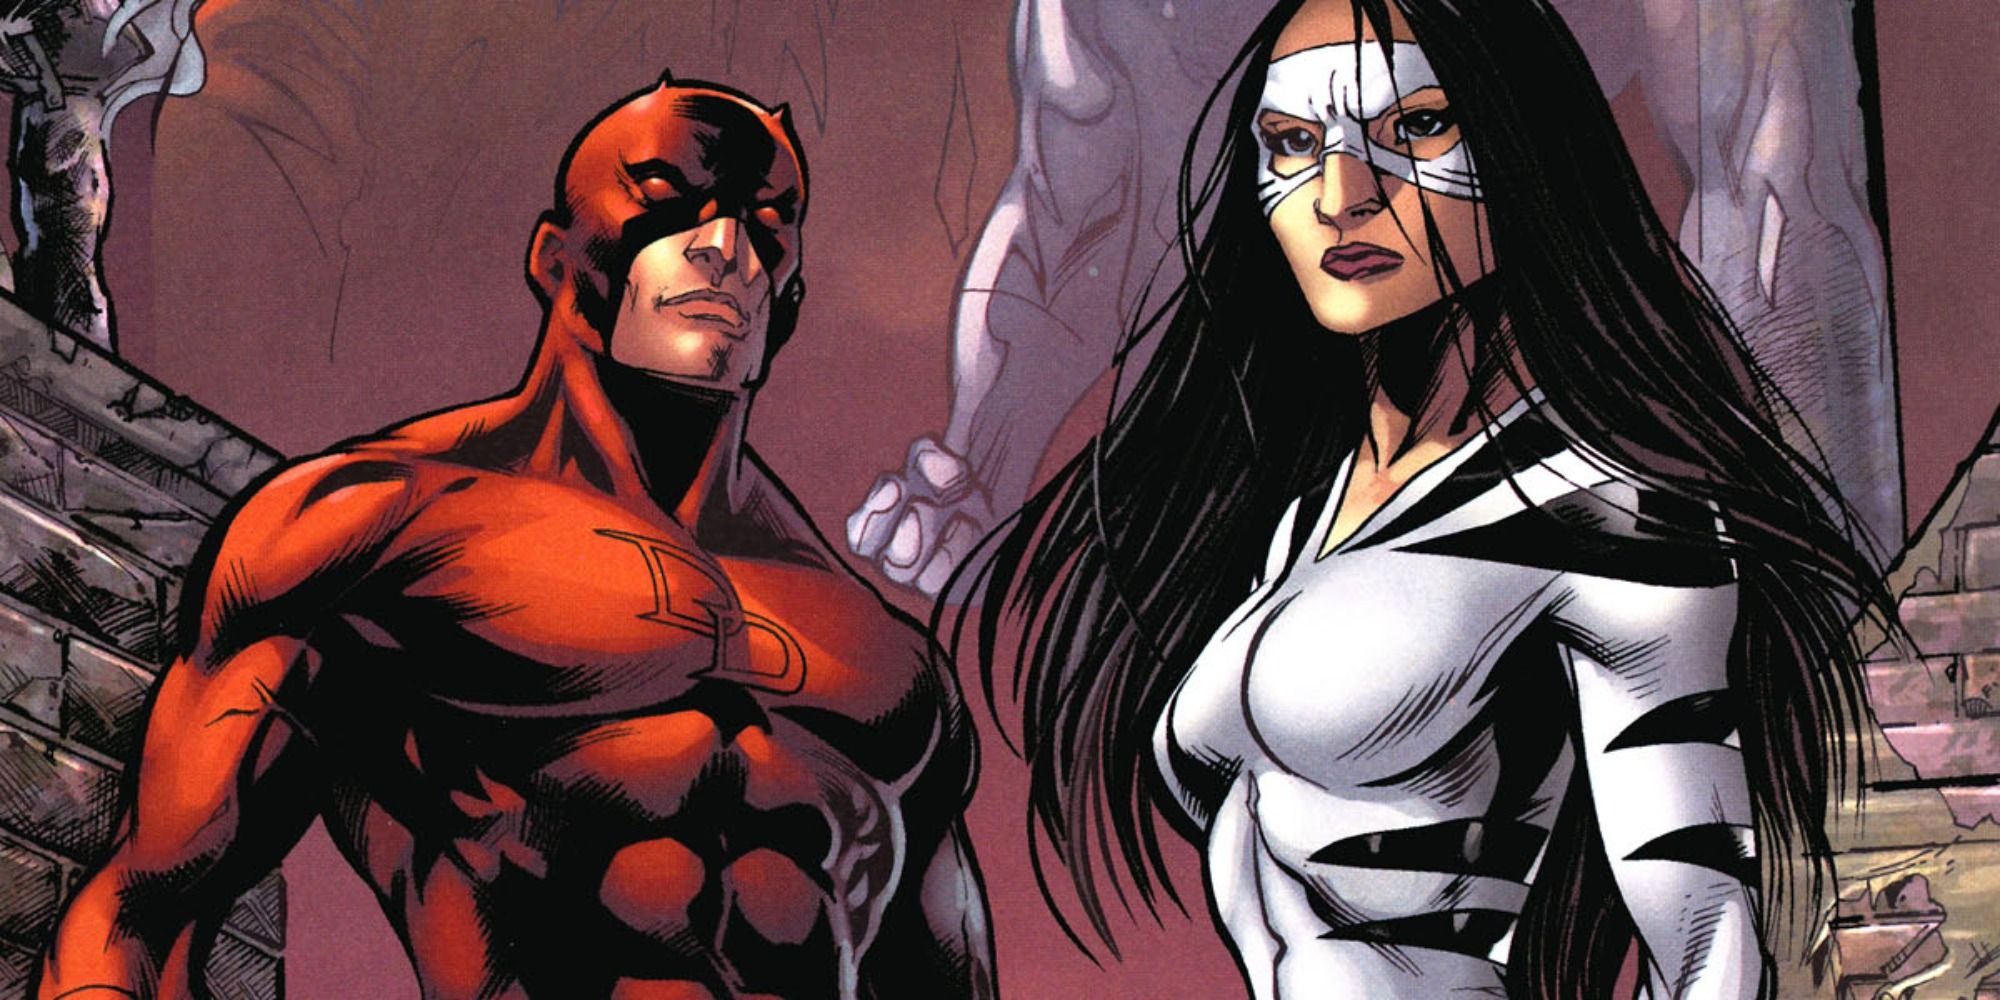 Daredevil and White Tiger team up in Marvel Comics.